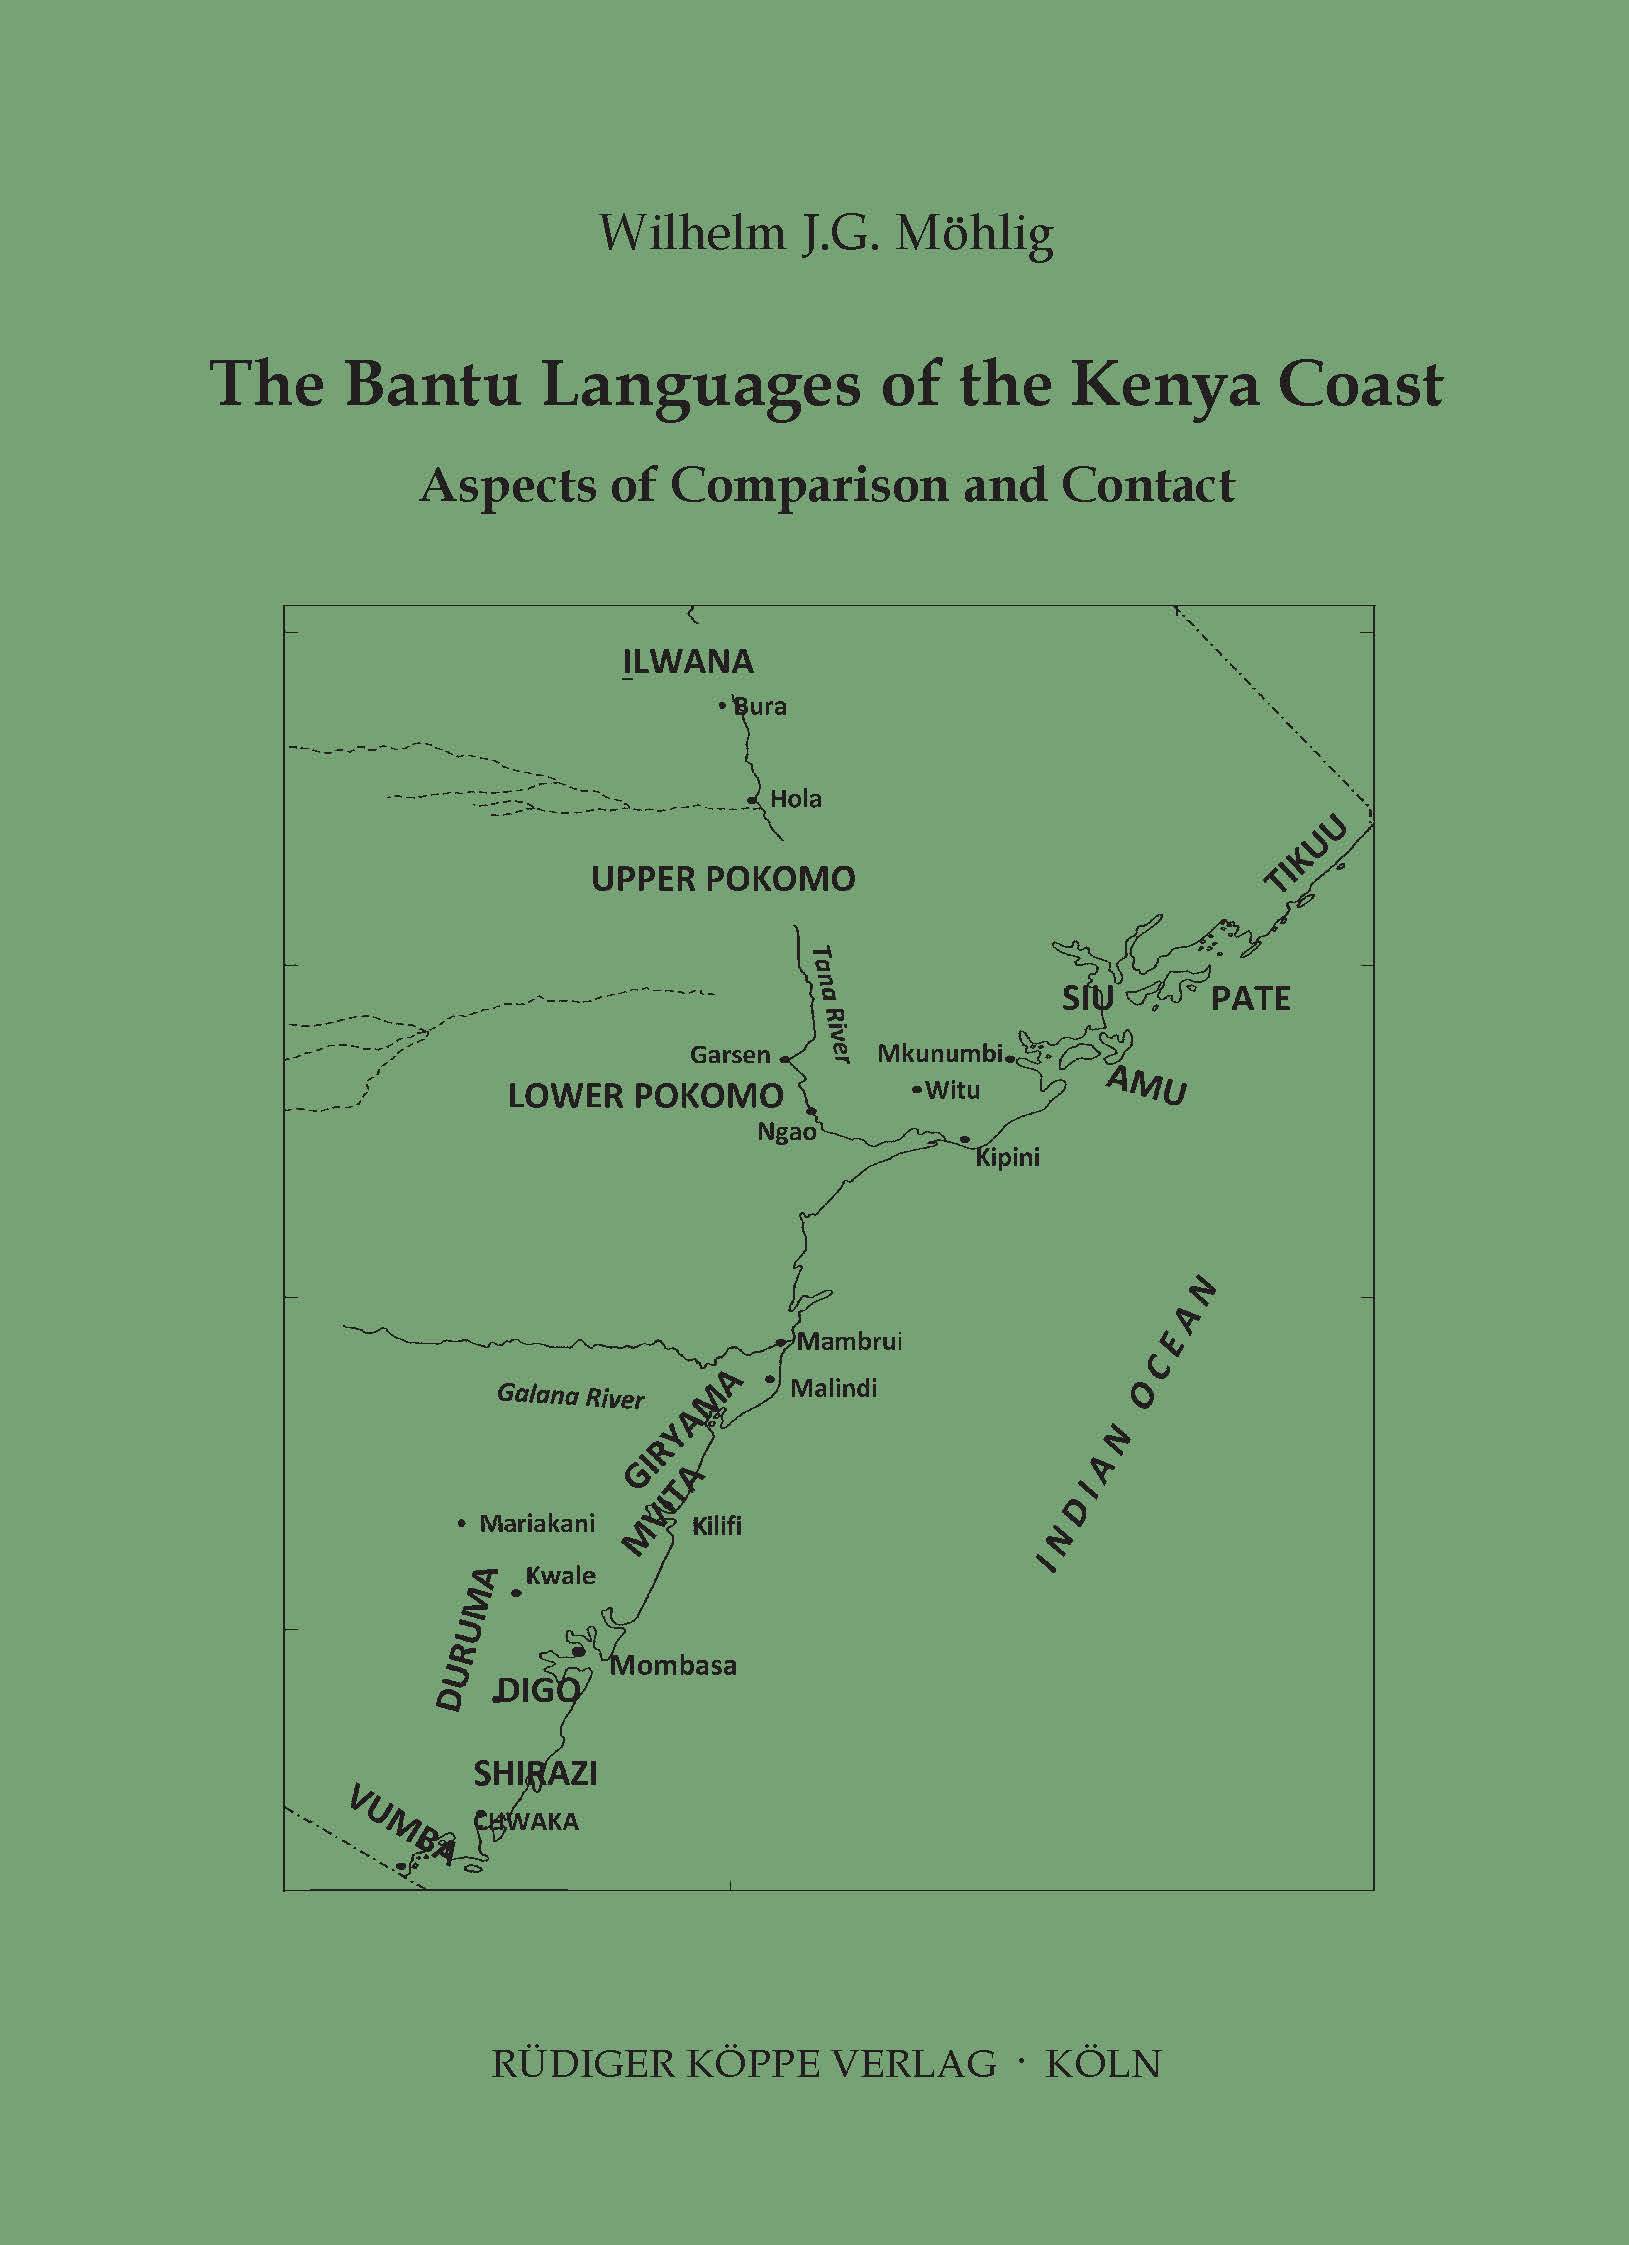 Atlas of Kamba Dialects (Kenya Bantu E.55)